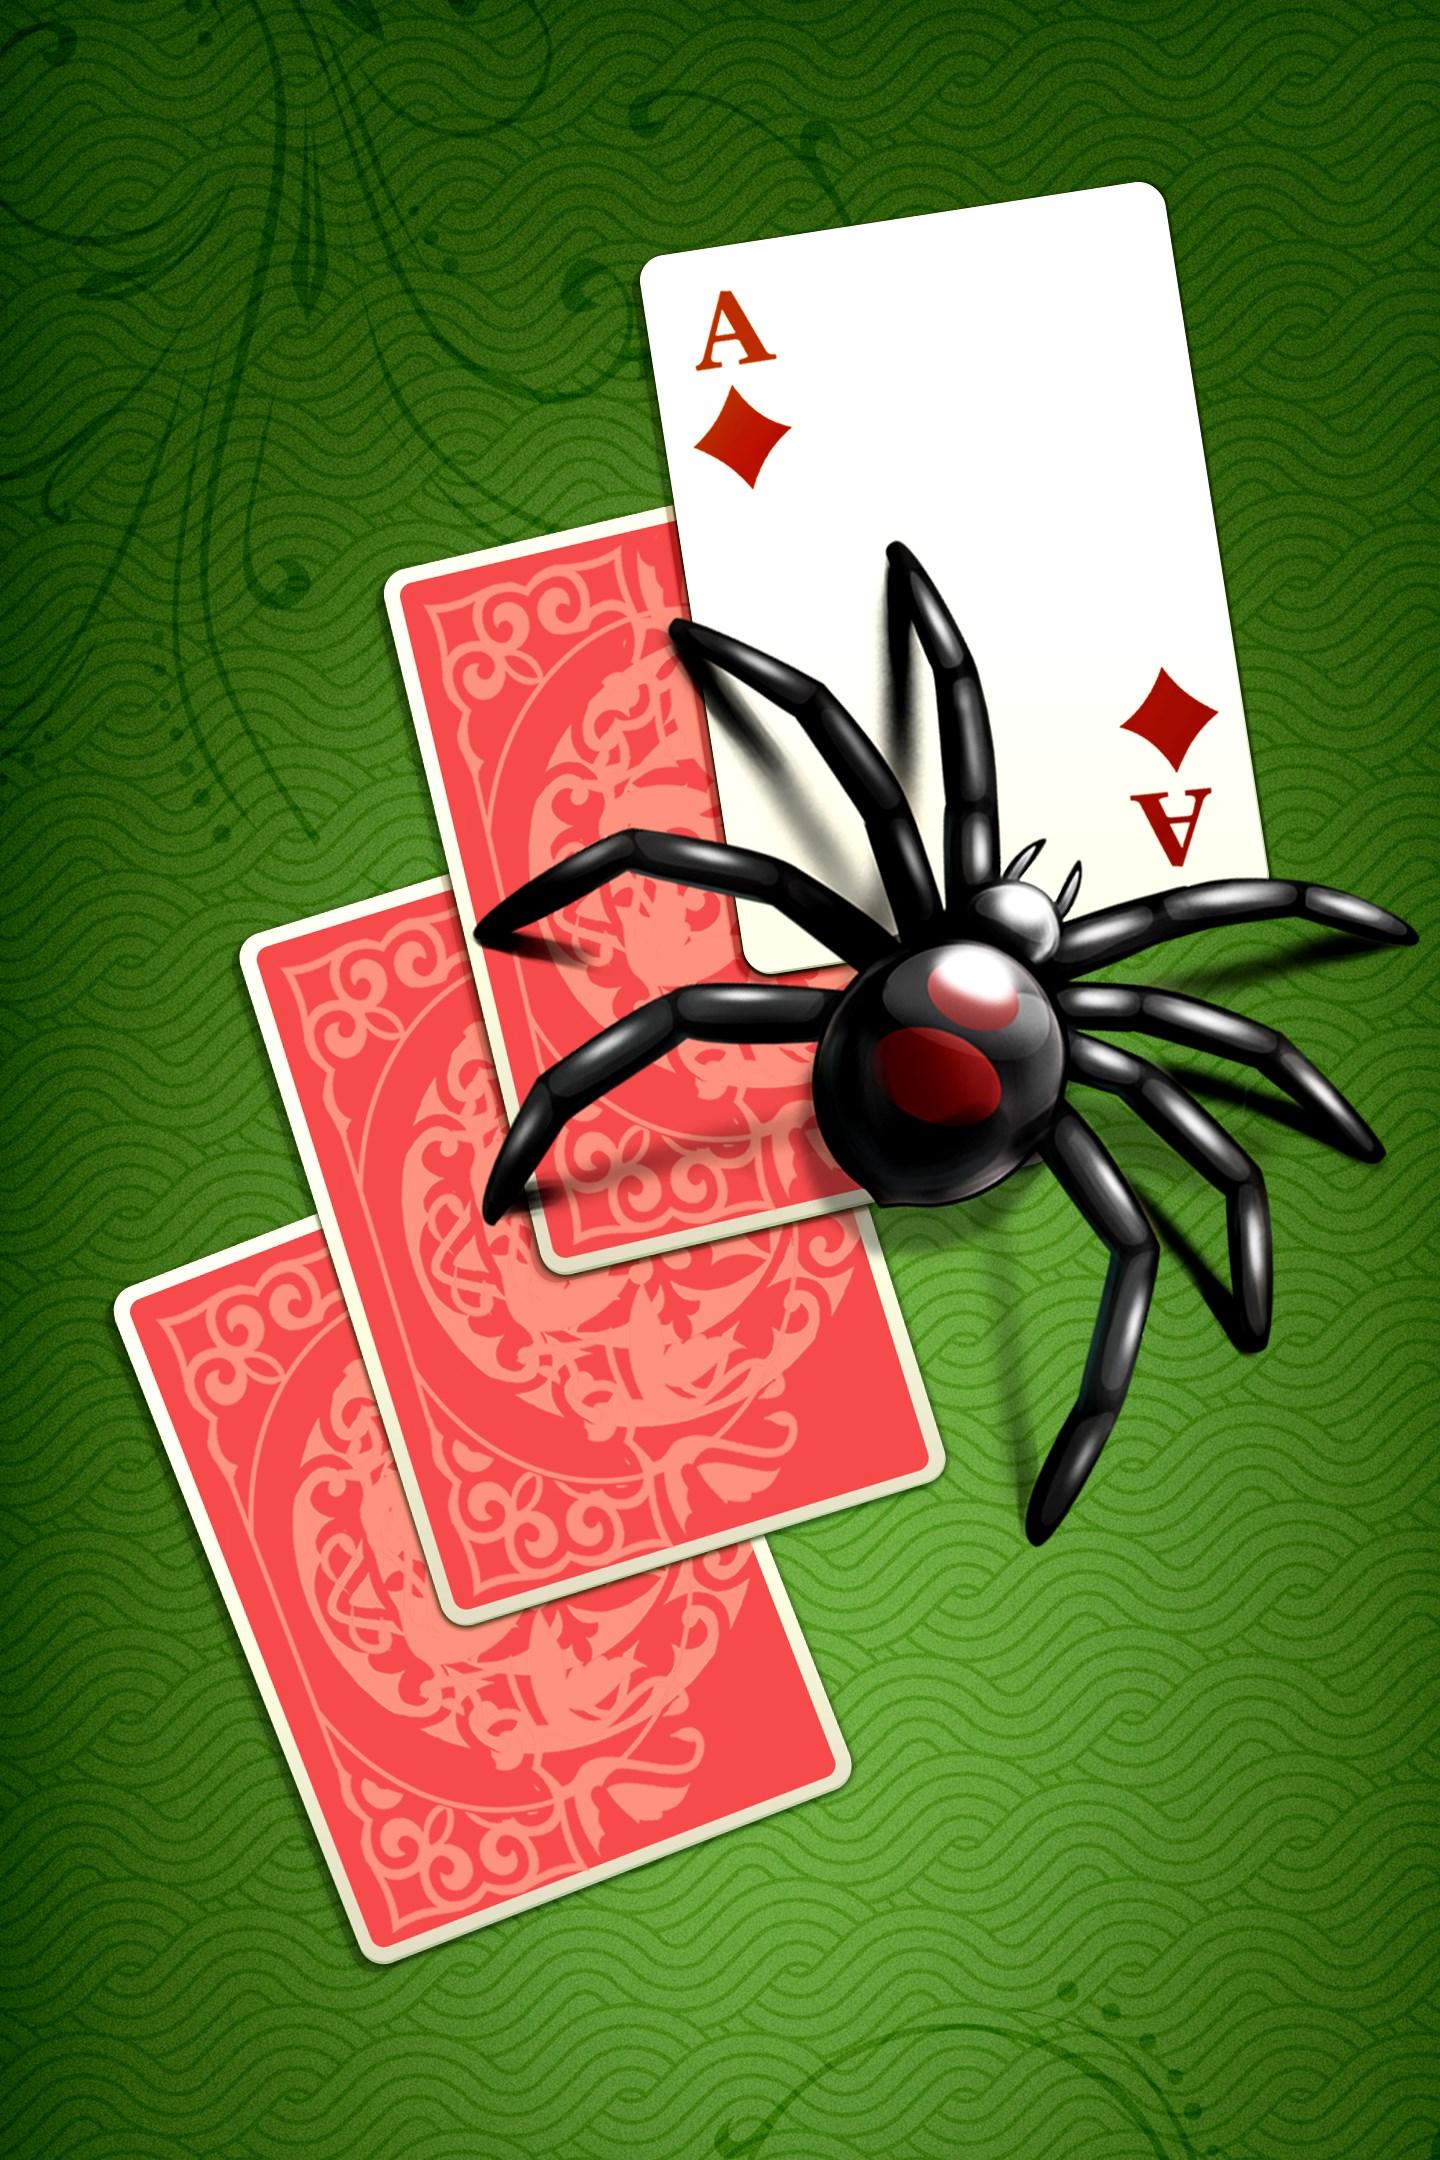 black spider solitaire games free download